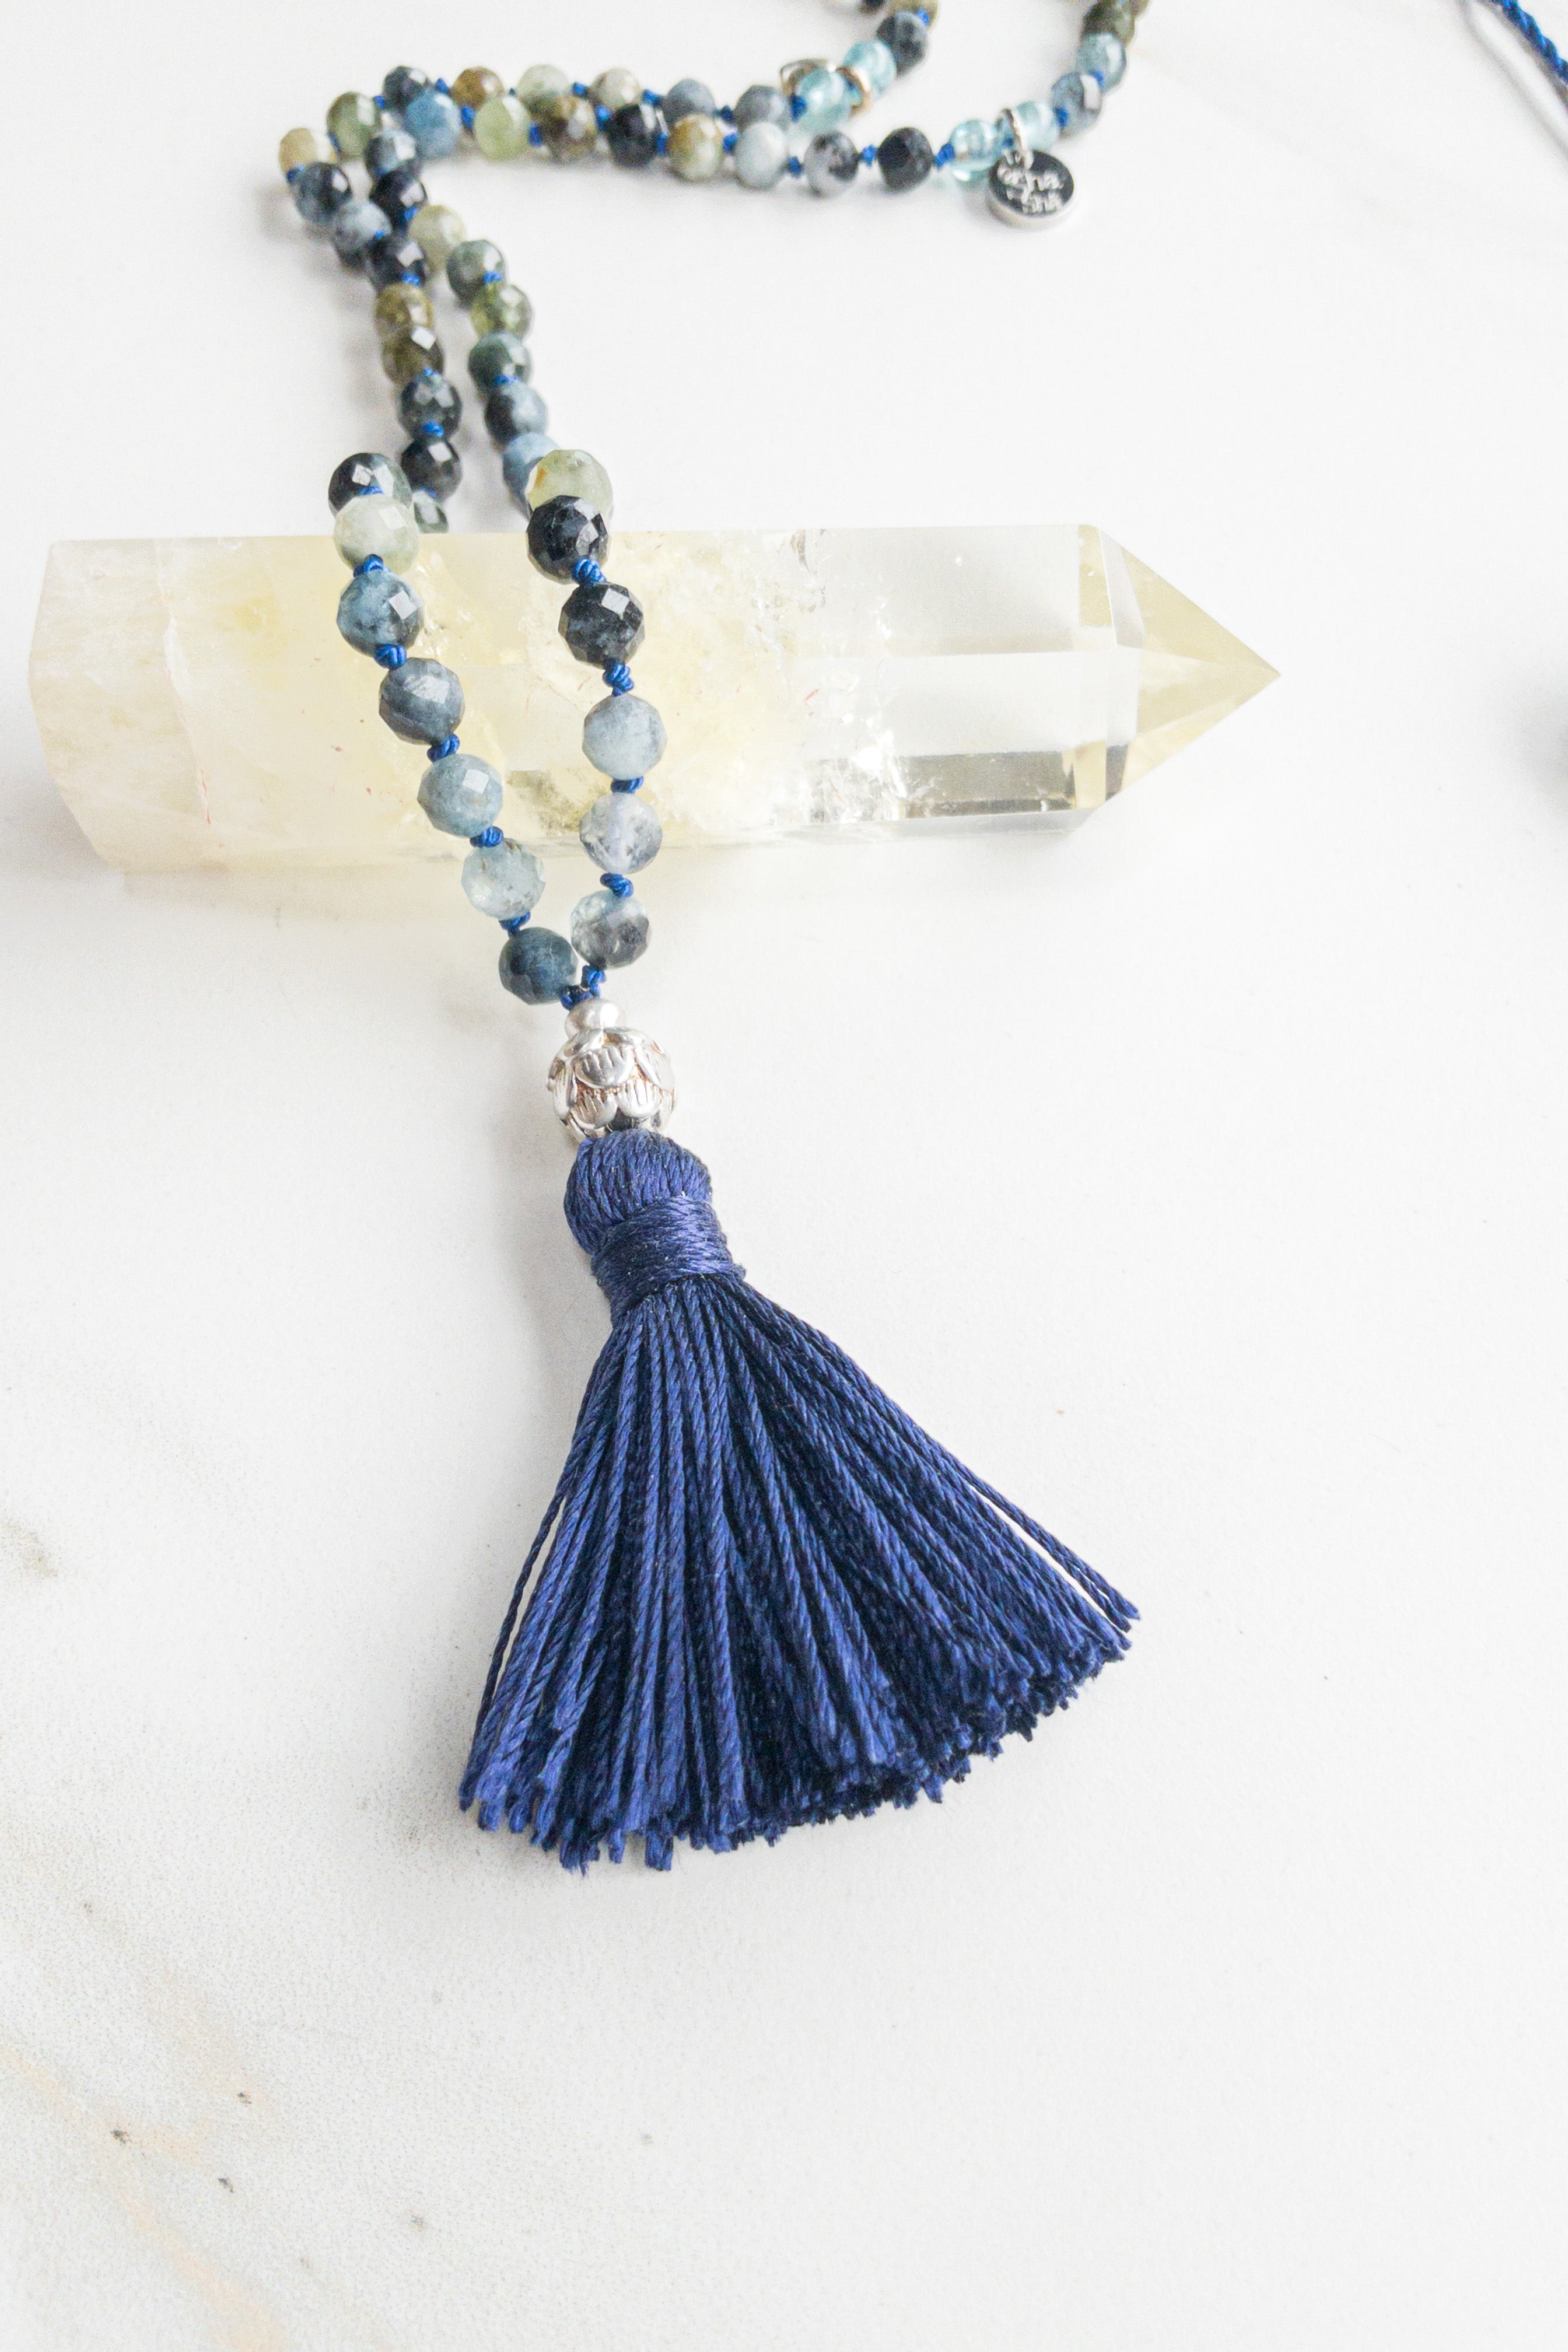 ShaSha "Roots" mini Mala - Green and Blue Aquamarine - shashā yoga jewellery store Switzerland 